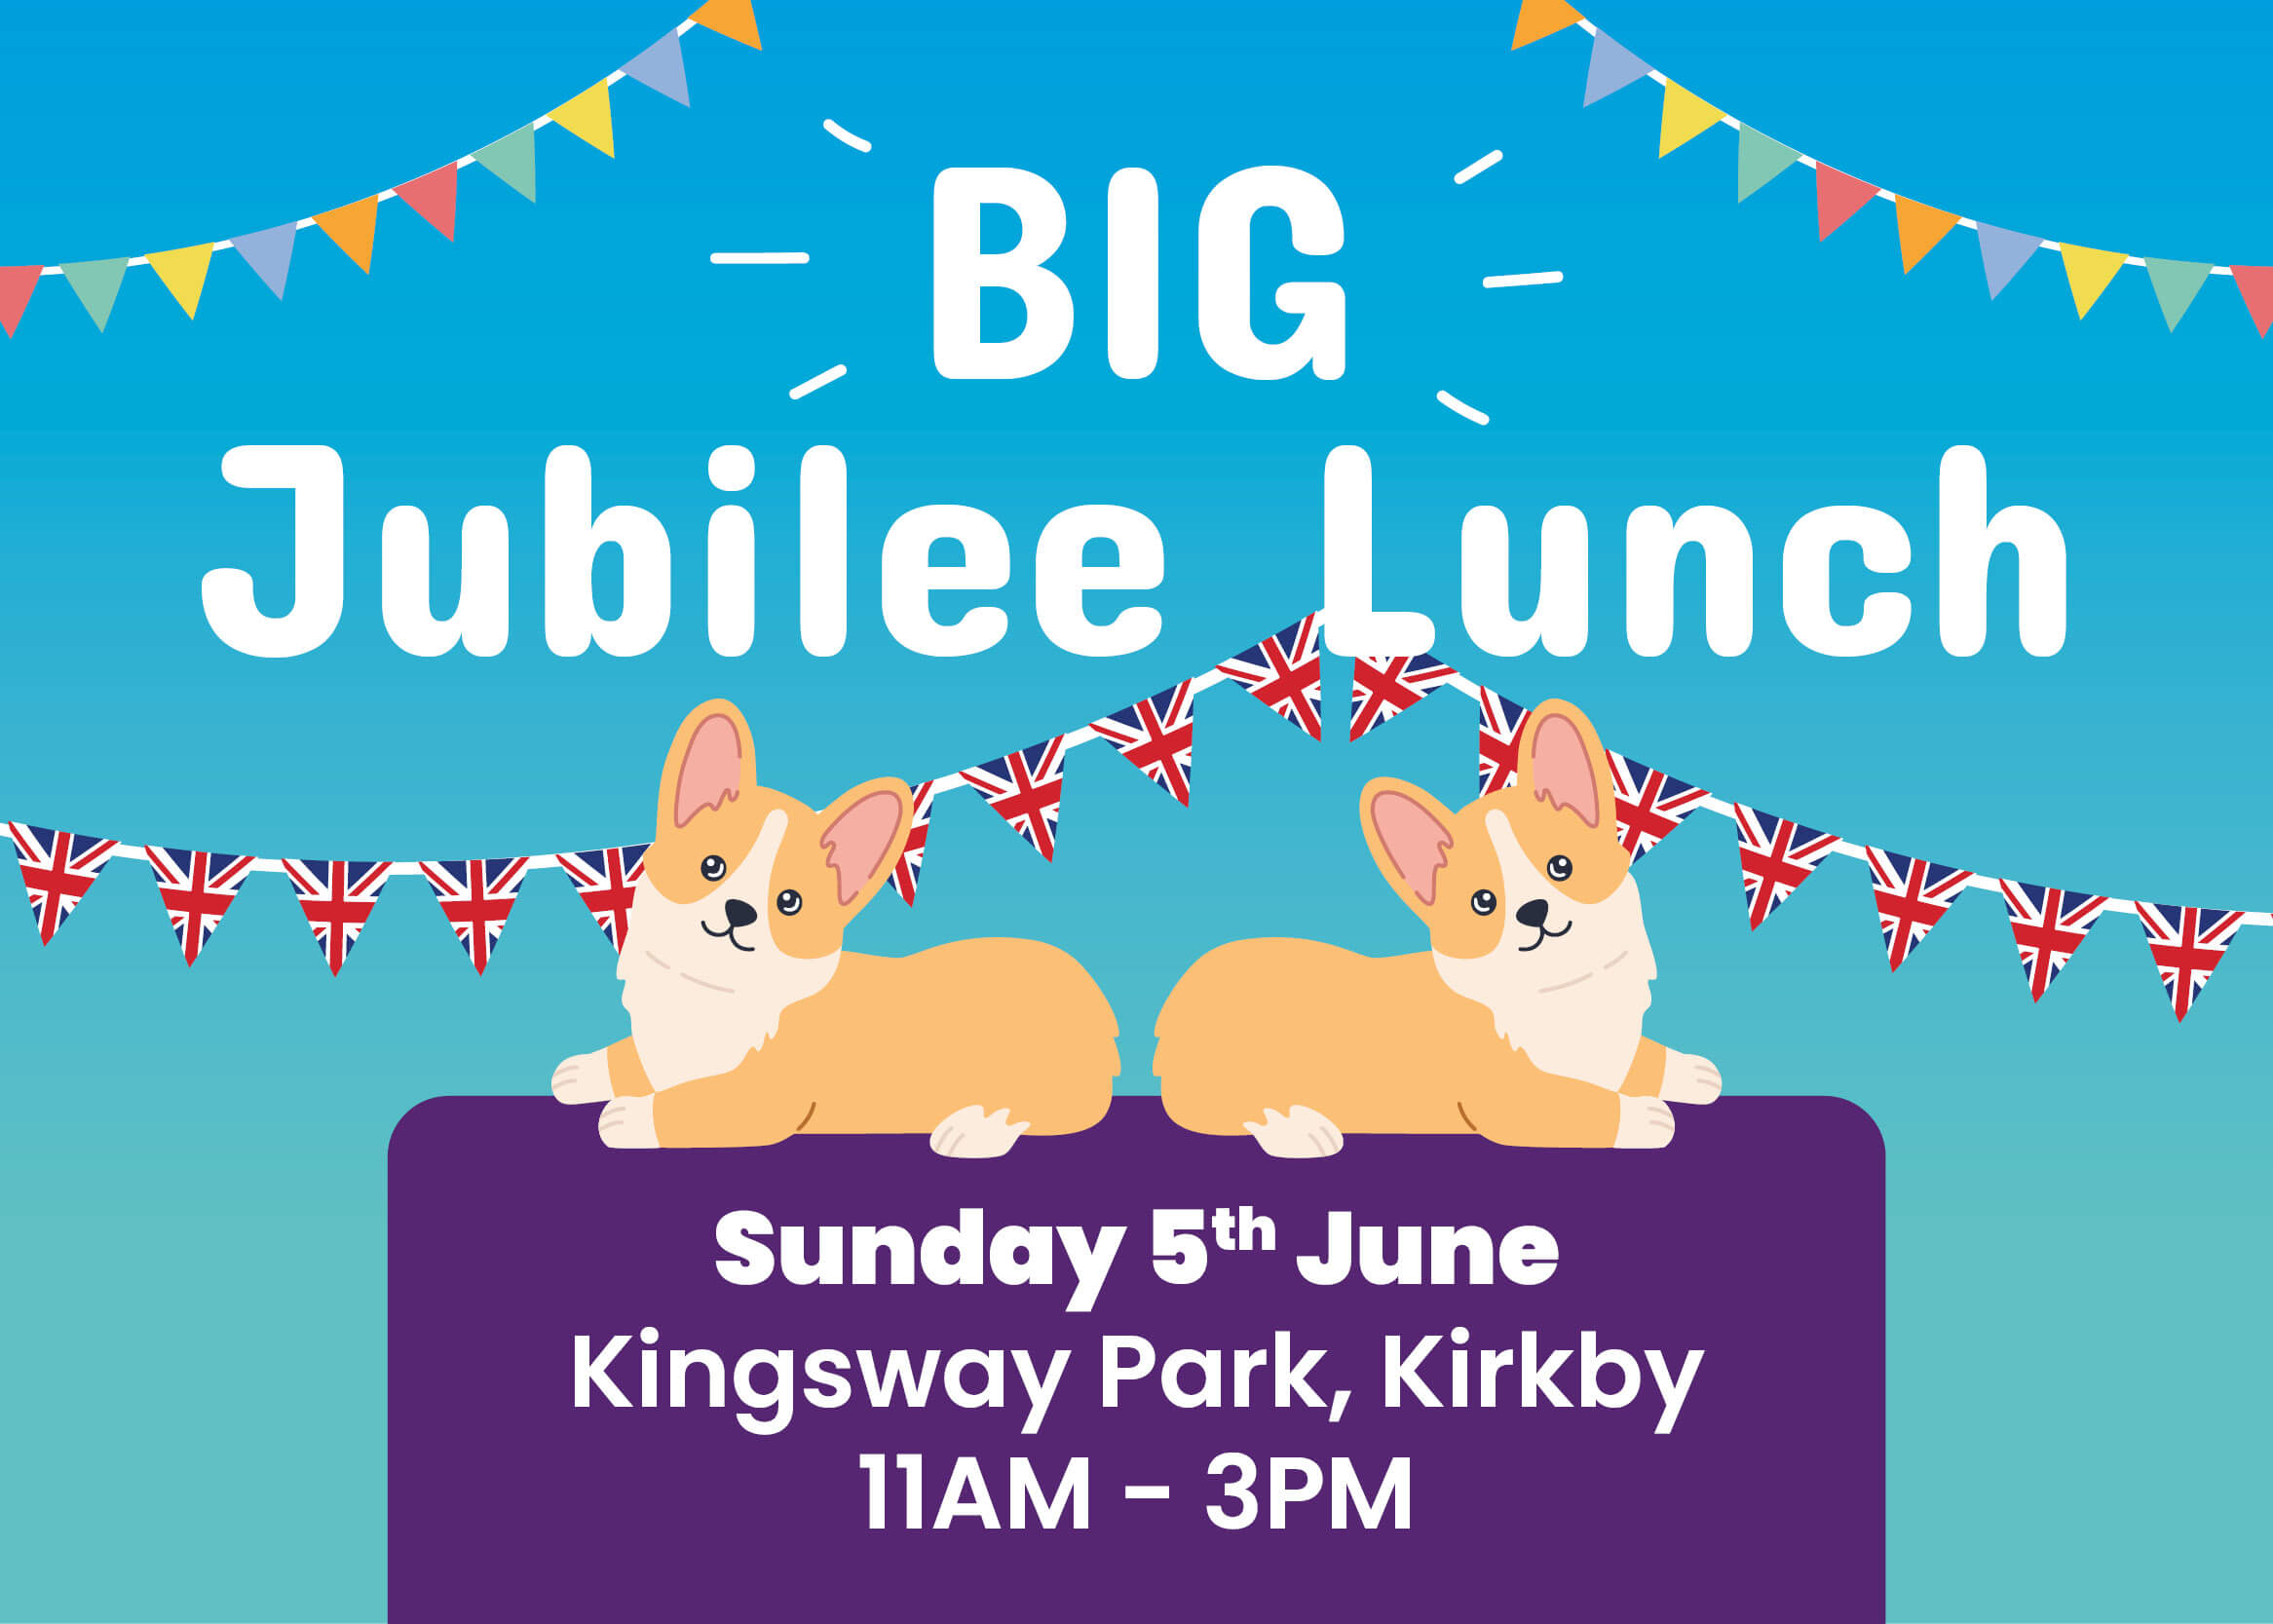 Big Jubilee lunch - Sunday 5 June 2022, 11am - 3pm, Kingsway Park, Kirkby